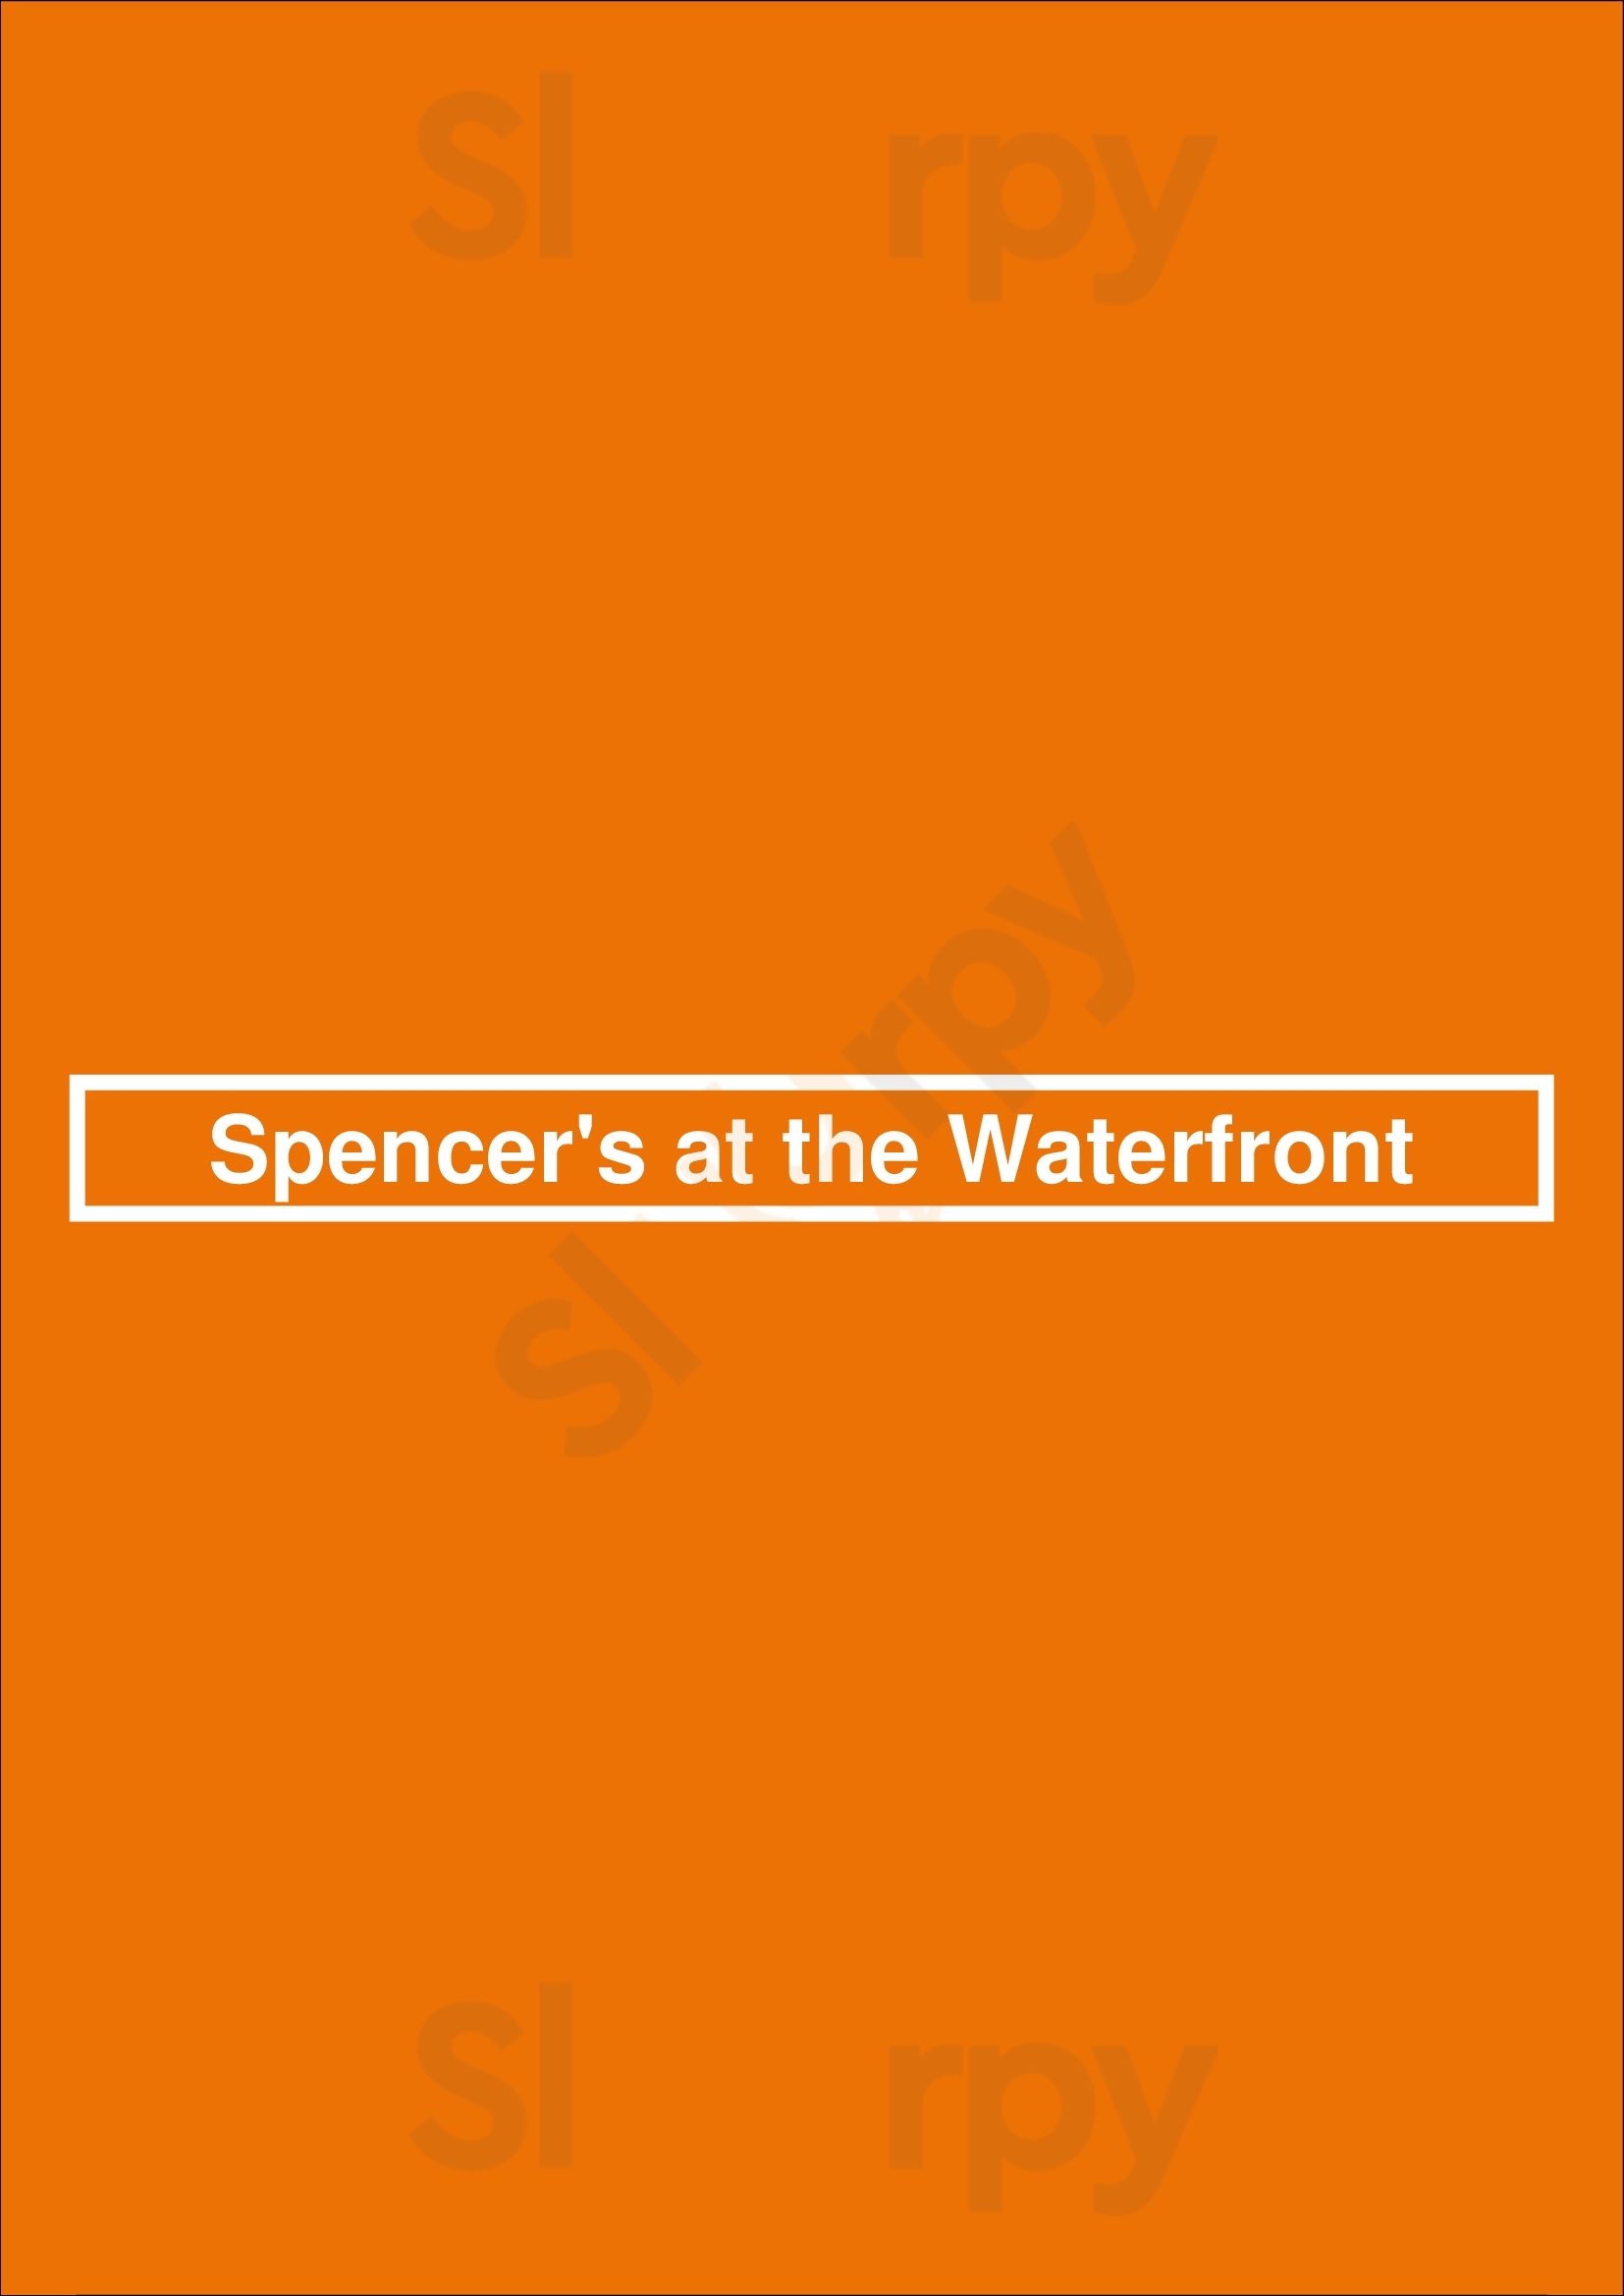 Spencer's At The Waterfront Burlington Menu - 1